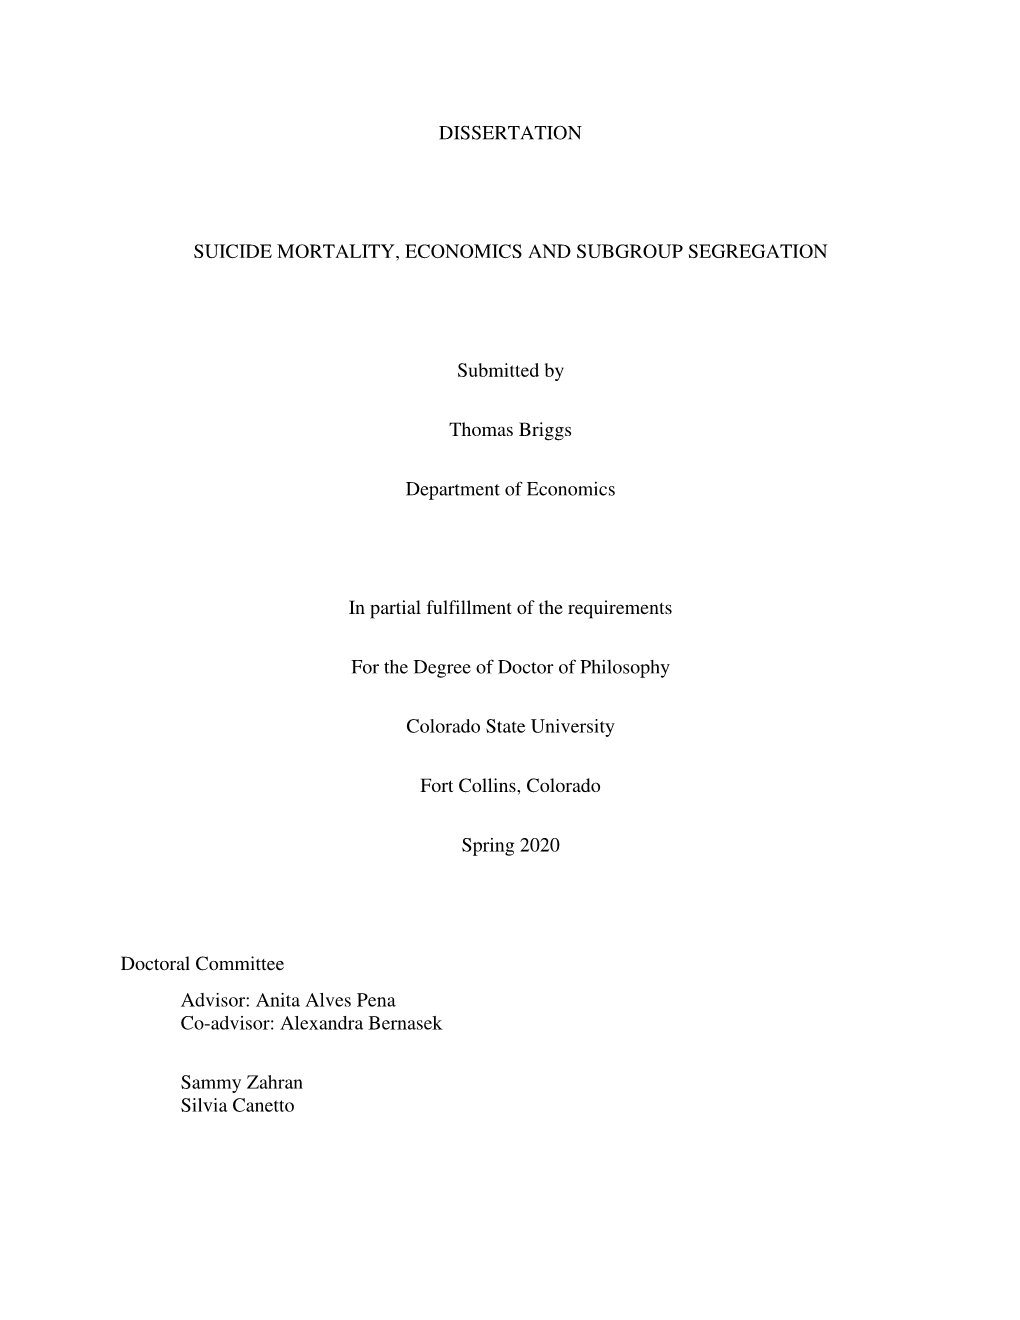 Dissertation Suicide Mortality, Economics And